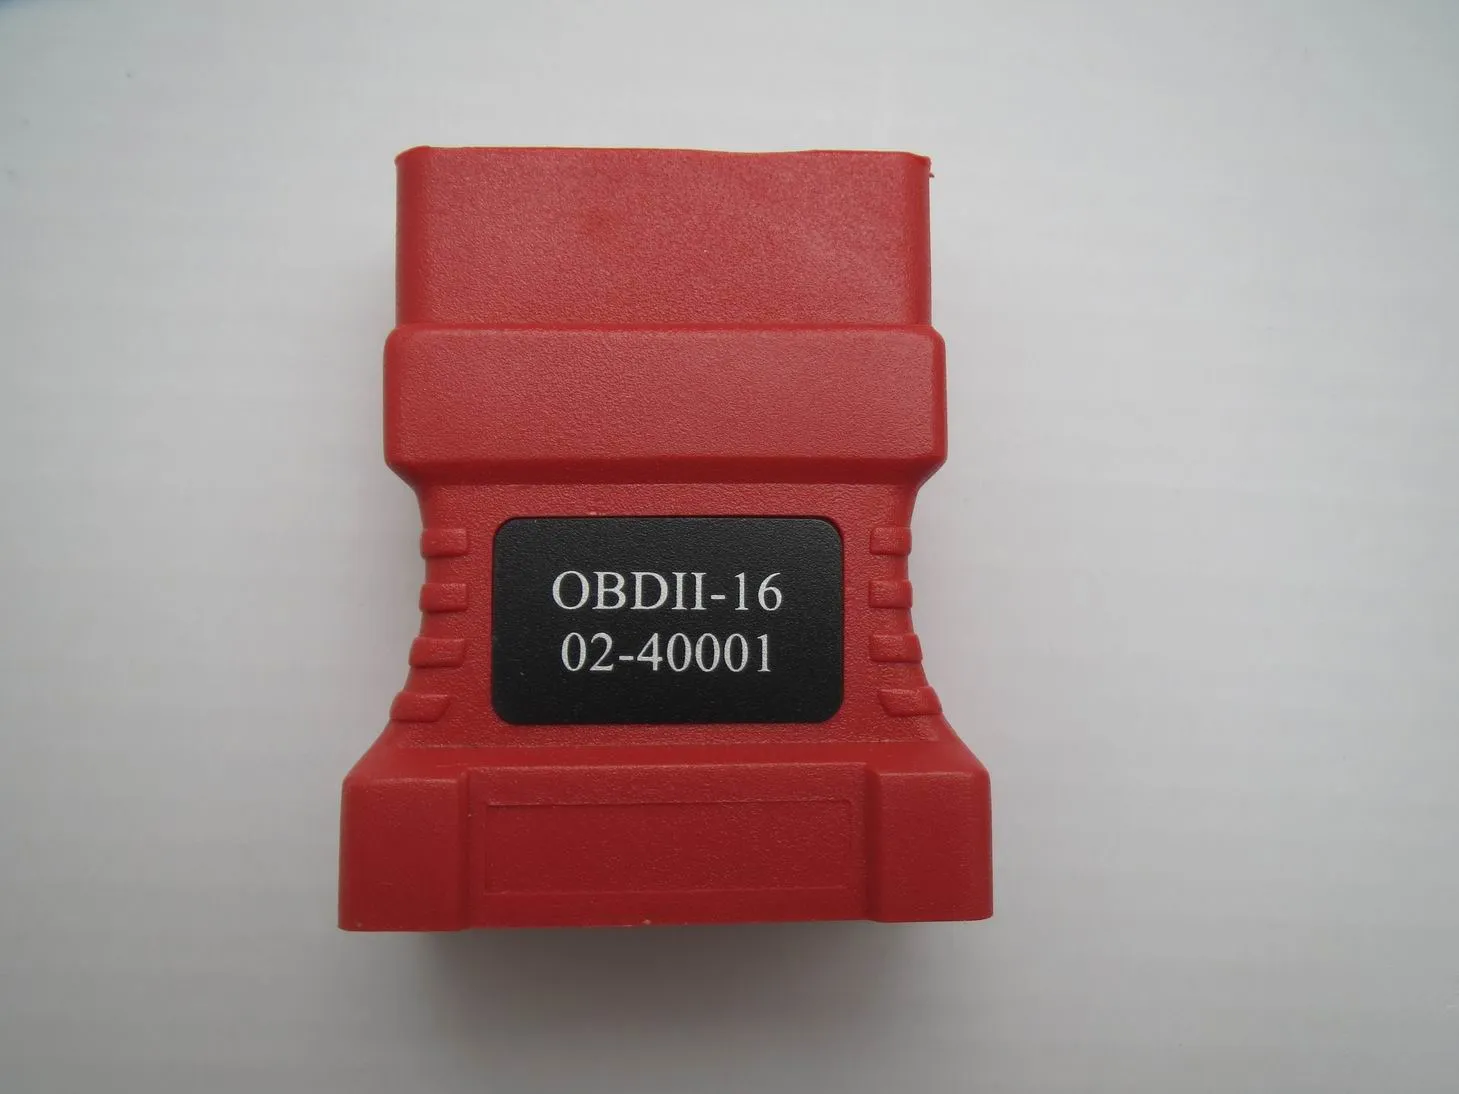 ADS-1 için O BDII-16 Bağlayıcı 02-40001 OBD-II adaptörü OBDII Obd2 Adaptörü OBD2 Connecter OBDII Ücretsiz Kargo